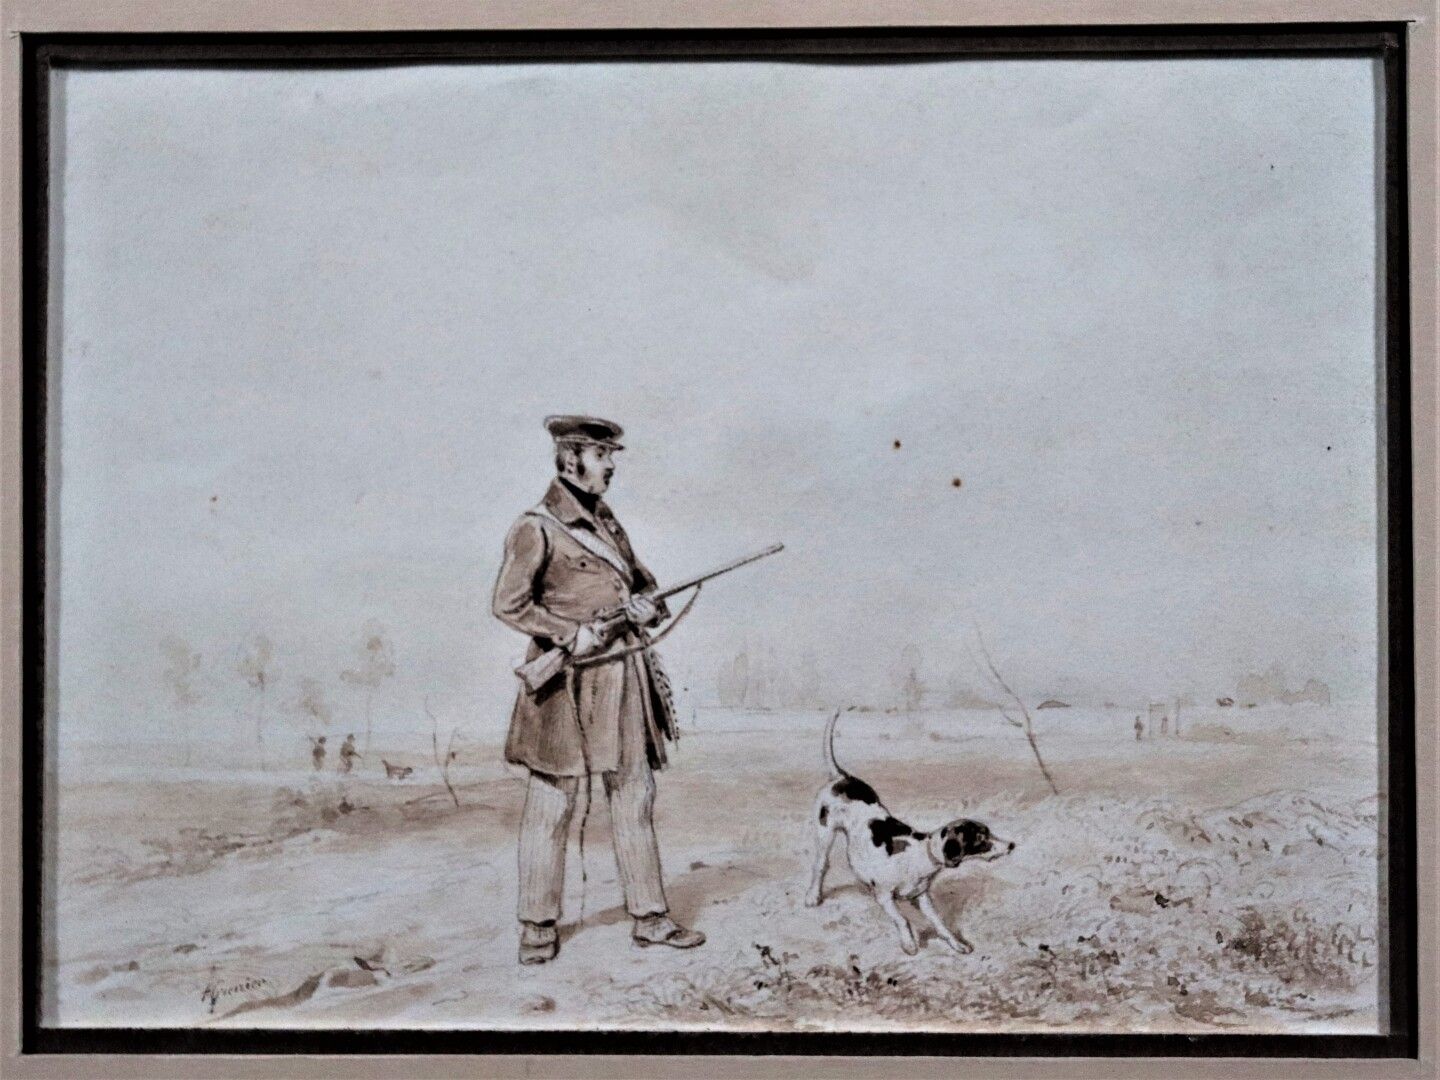 Null 弗朗索瓦-格莱尼耶-德-圣马丁(1793-1867)

猎人和他的狗

棕色水墨画，已签名

高_11厘米，宽_15厘米